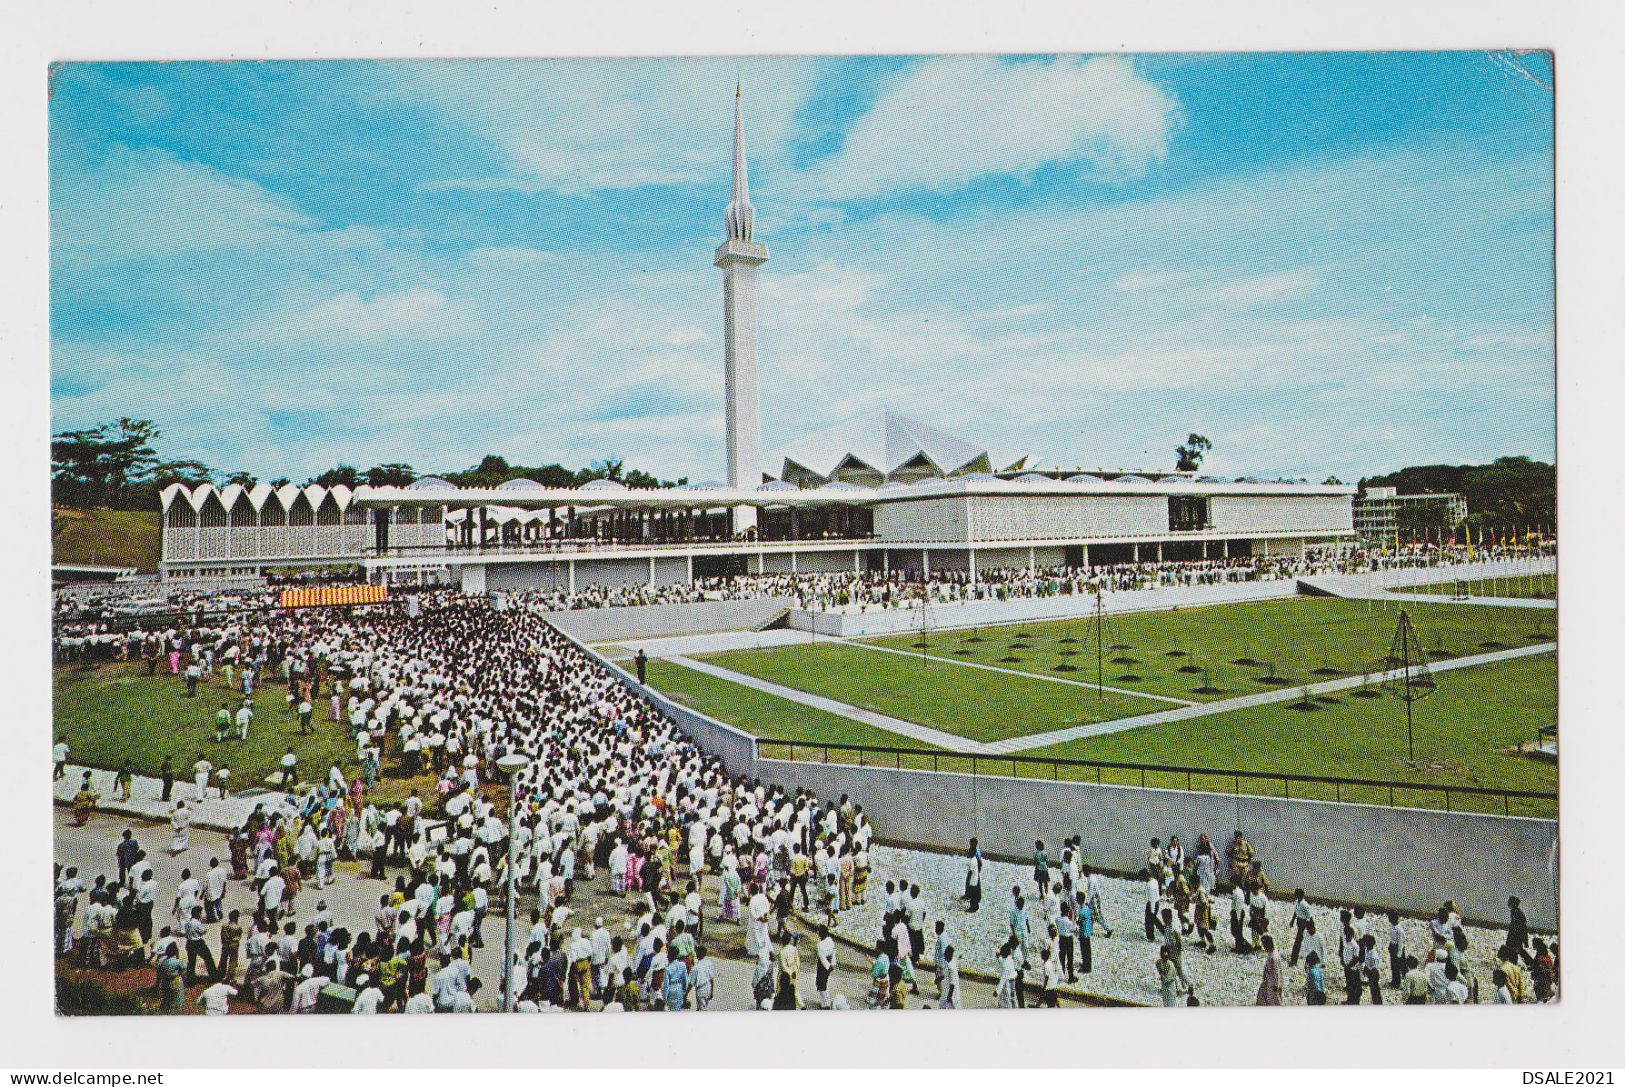 Malaysia KUALA LUMPUR Masjid Negara Mosque View, Vintage Photo Postcard RPPc AK (51559) - Malaysia